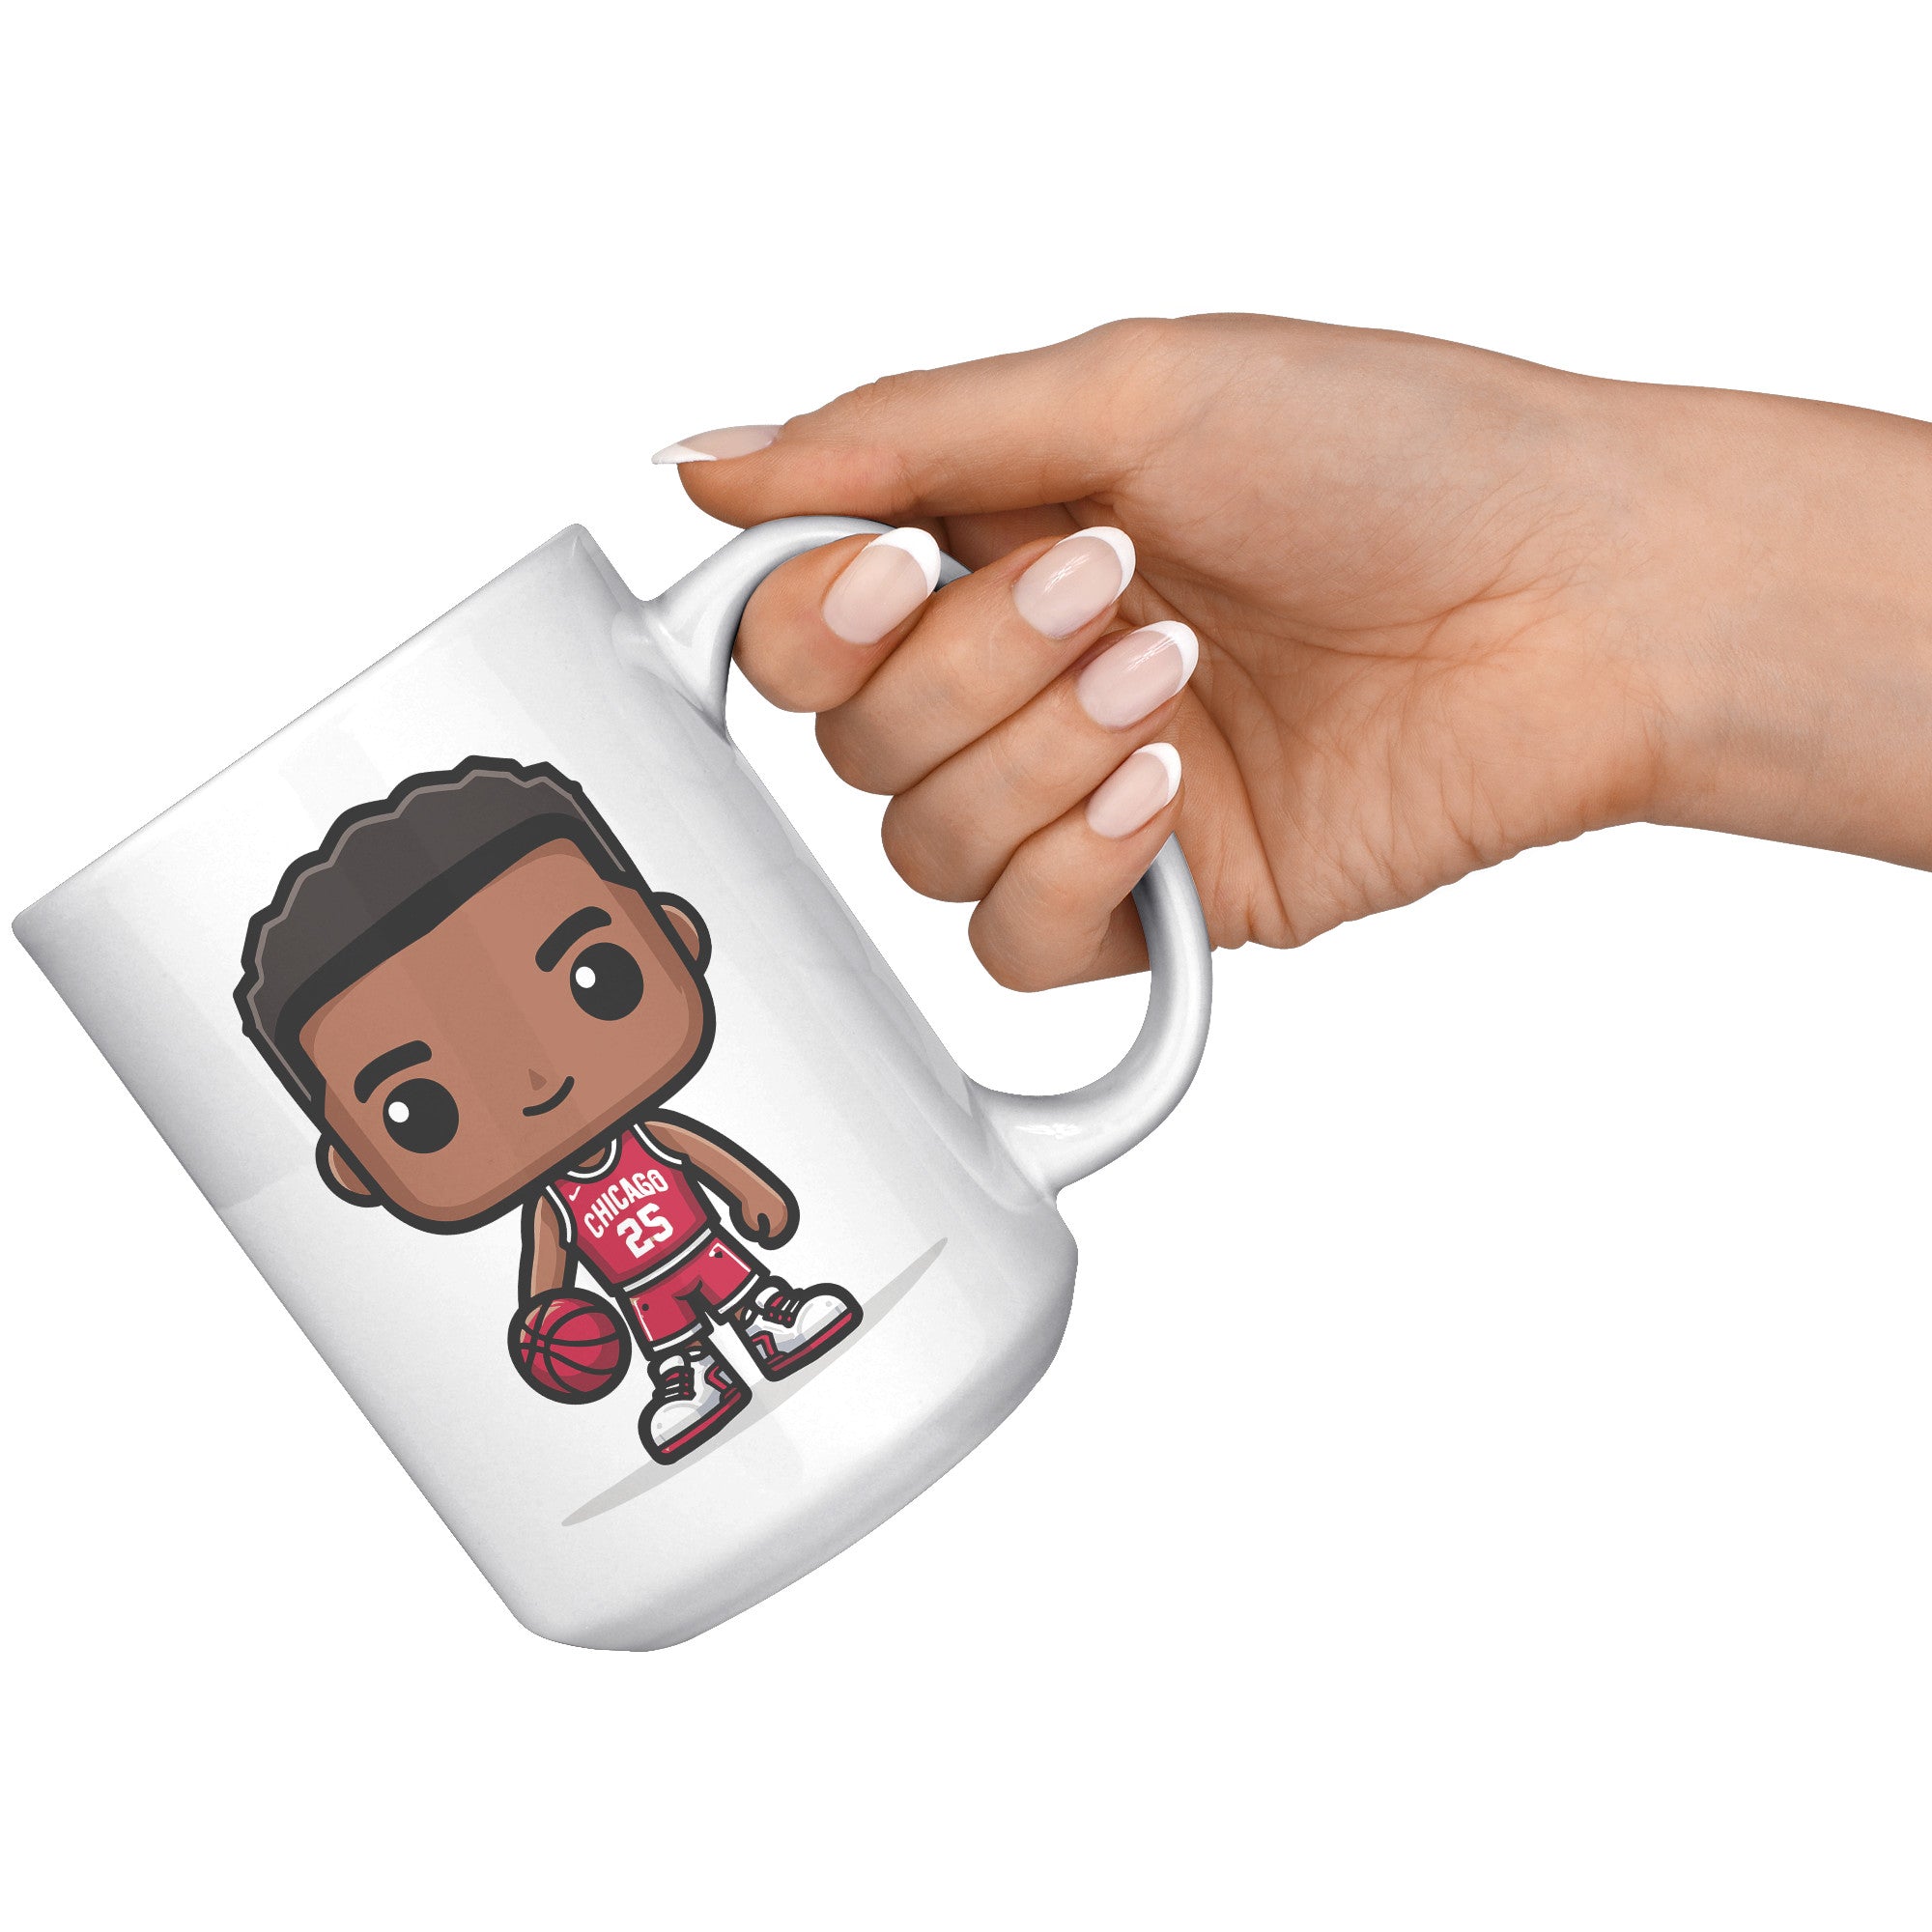 "Slam Dunk Basketball Coffee Mug - Hoops Enthusiast Cup- Perfect Gift for Basketball Players & Fans - Court-Ready Style Coffee Mug" - E1